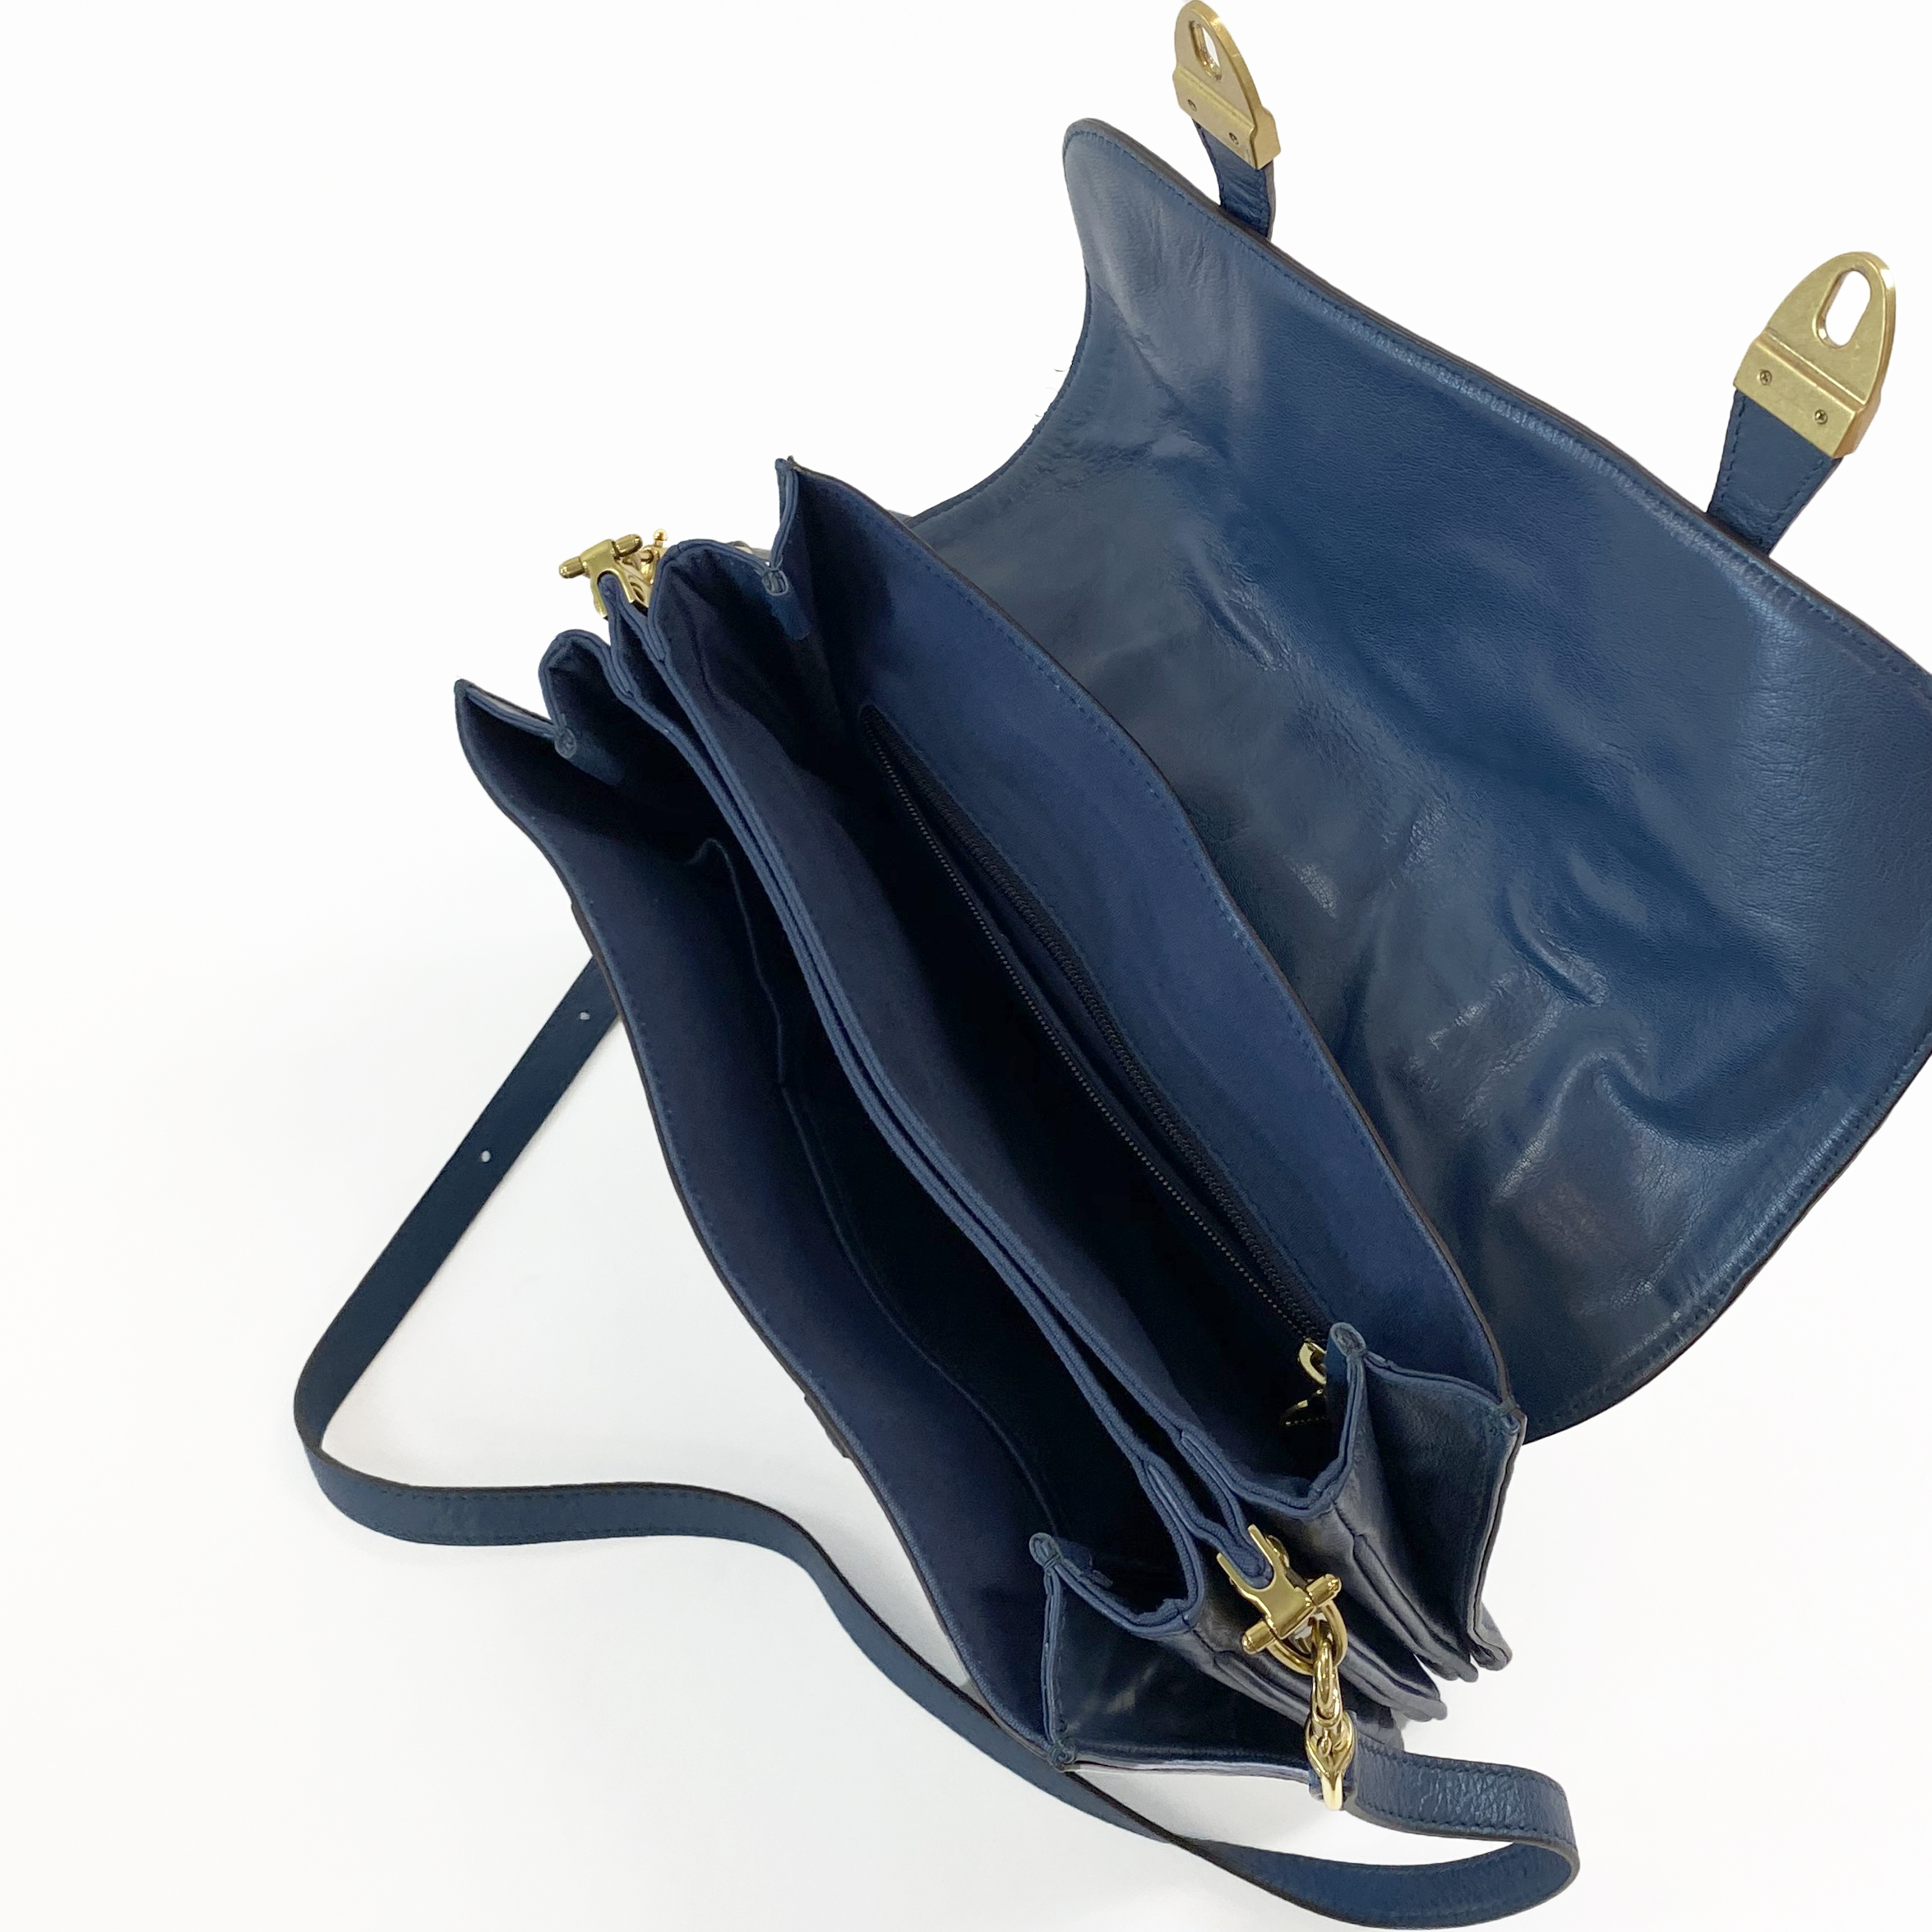 Rabeanco Leather Consertina Handbag